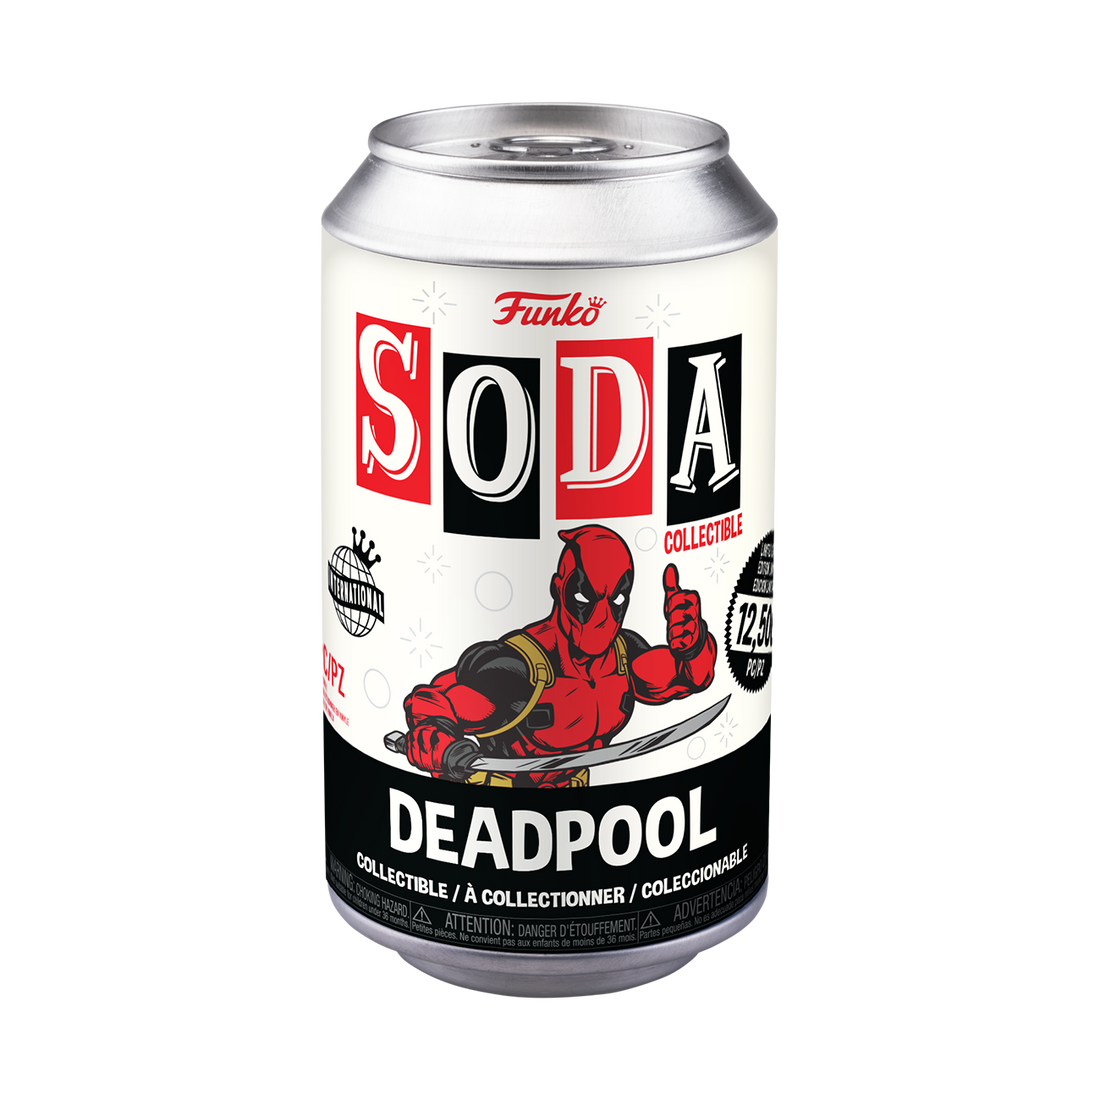 Marvel Funko Soda Vinyl Figur Deadpool